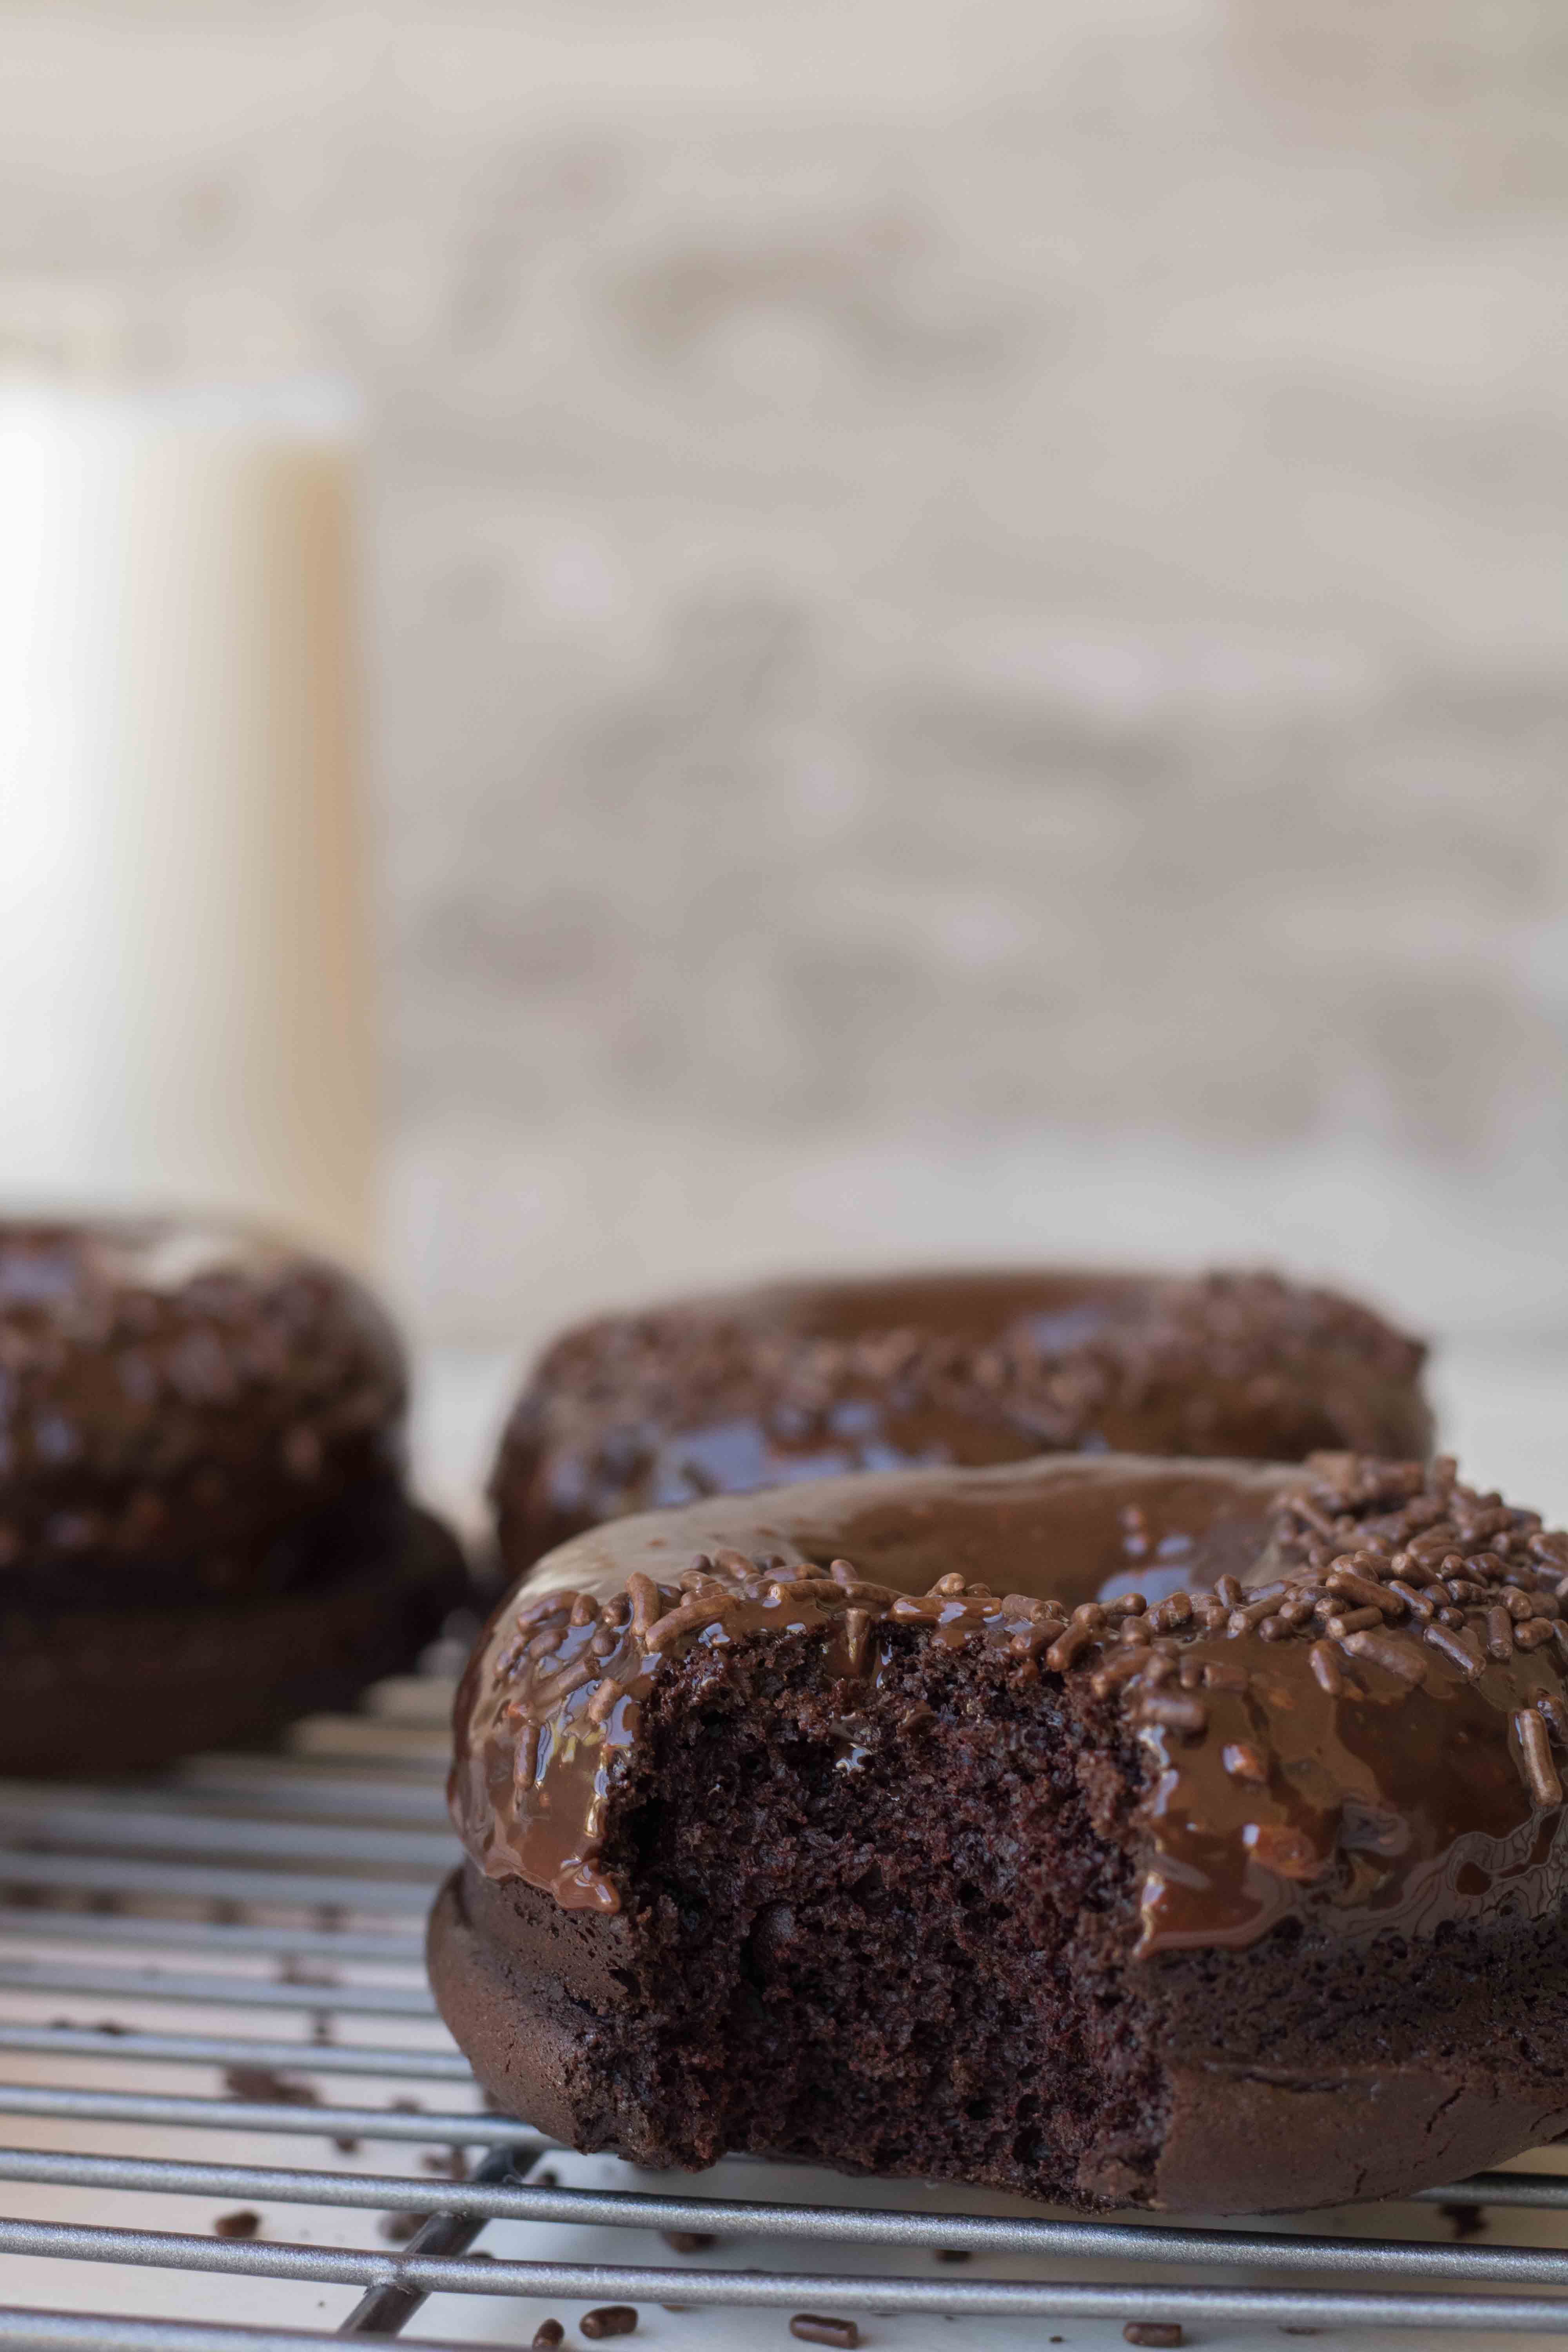 Glazed baked chocolate donuts